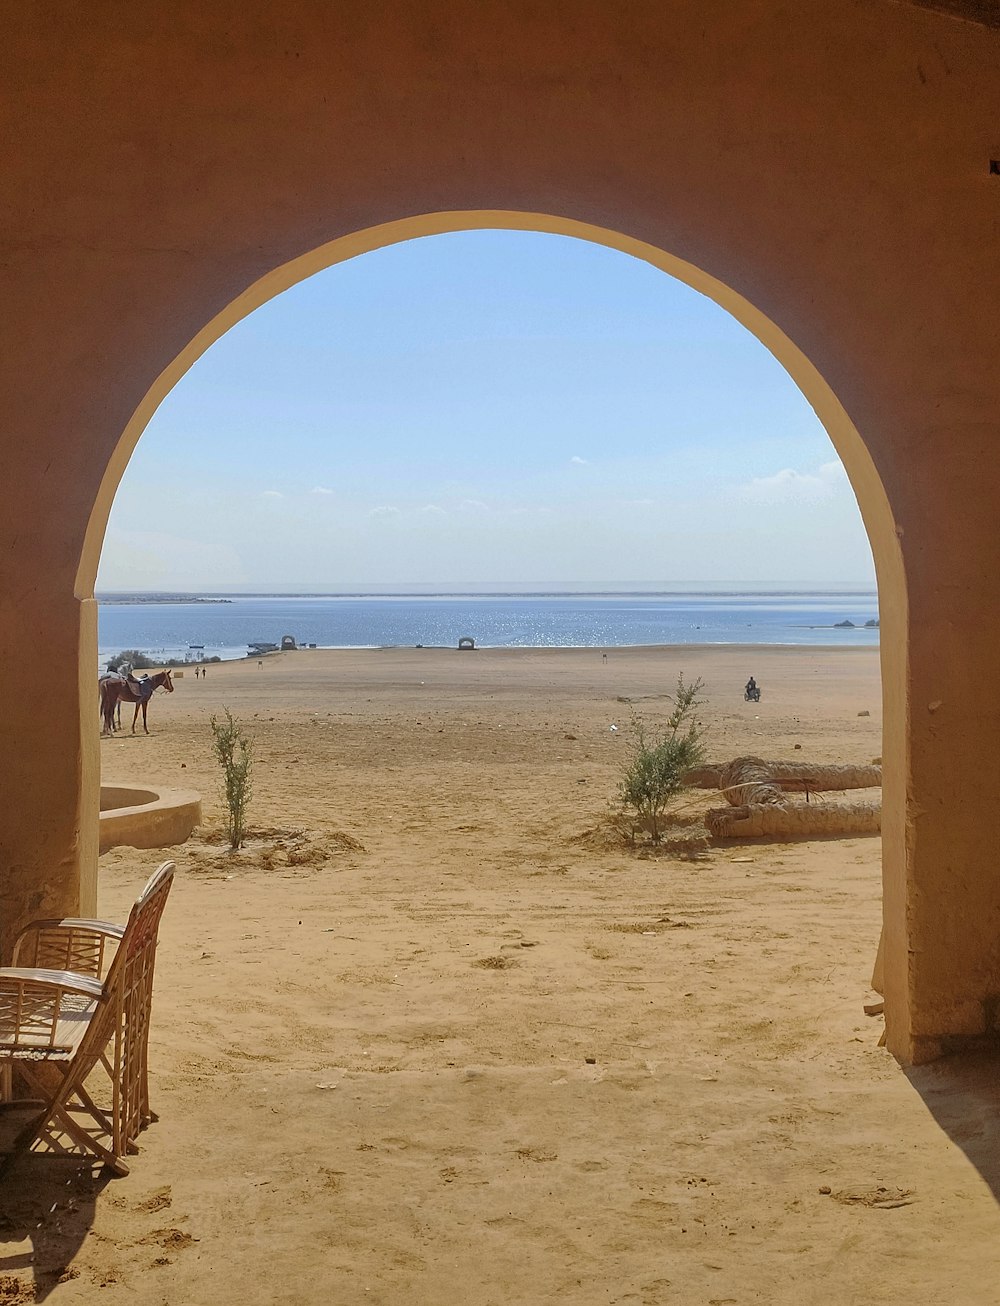 a view of a beach through an archway